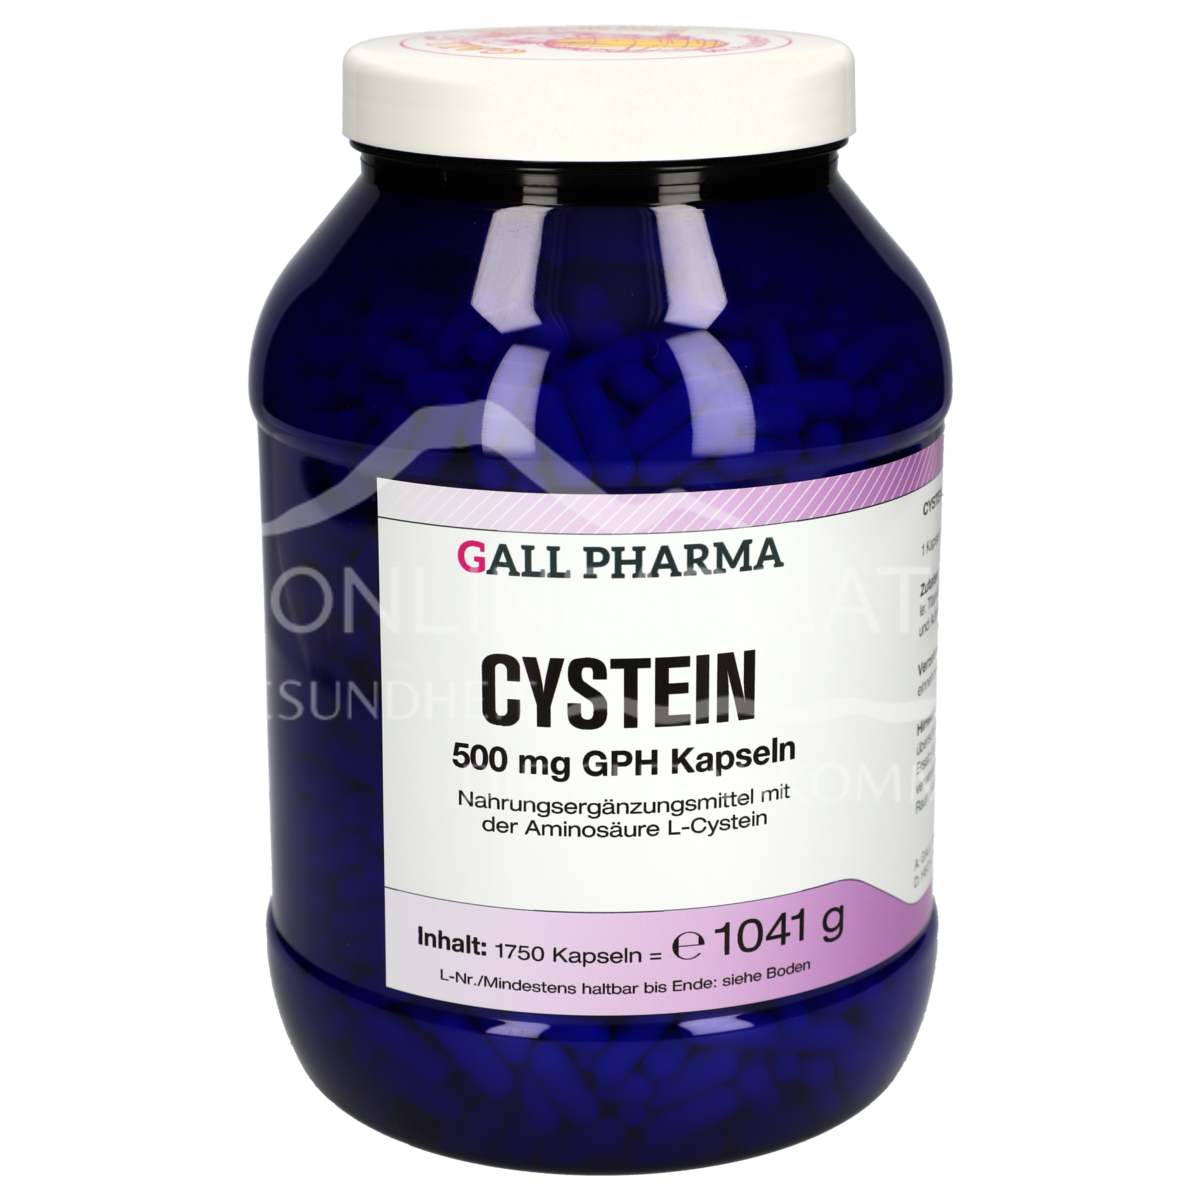 Gall Pharma Cystein 500 mg Kapseln